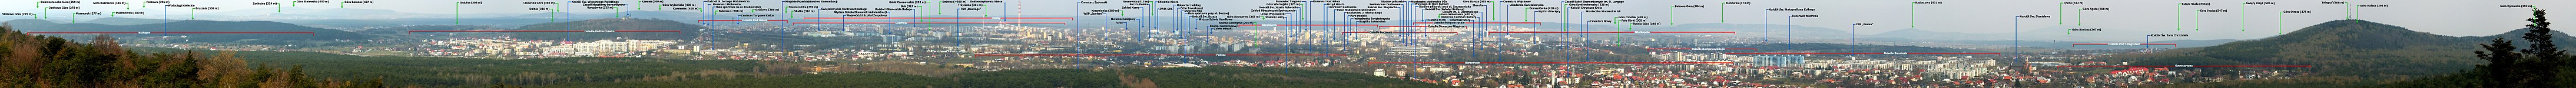 Panorama Kielc ssj 20060423.jpg